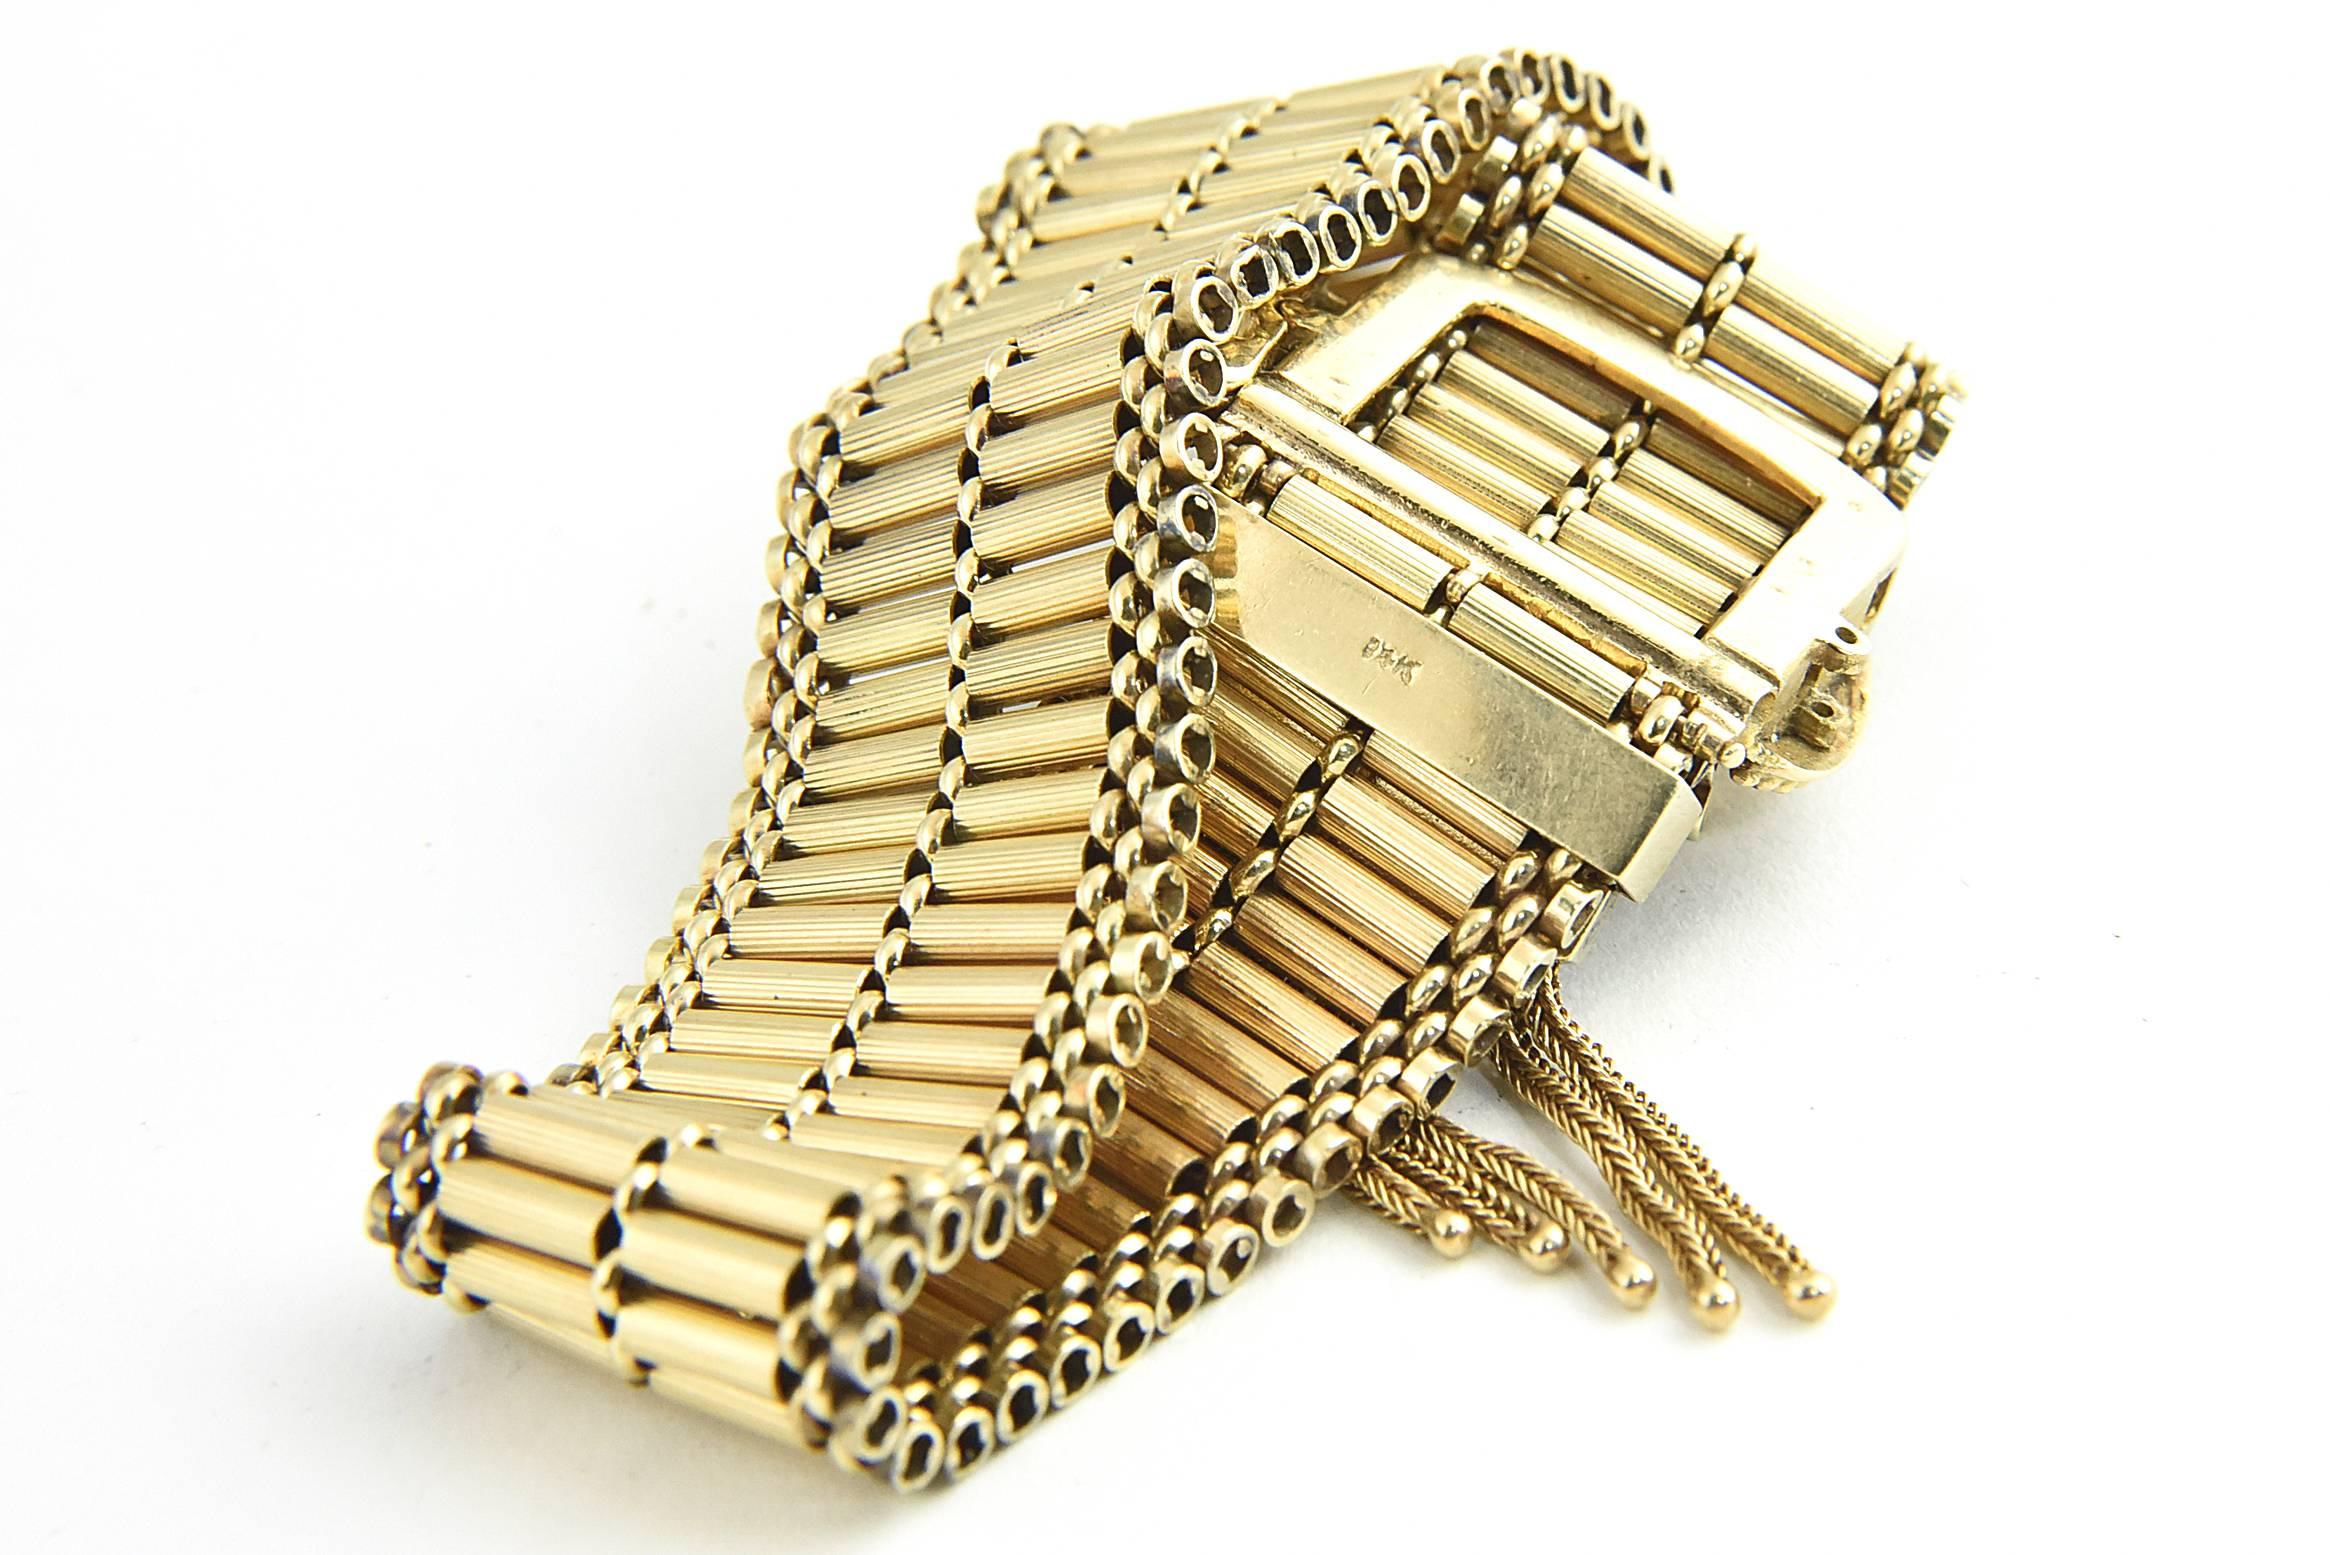 Women's 1950s Victorian Revival Gold Buckle Bracelet with Tassels